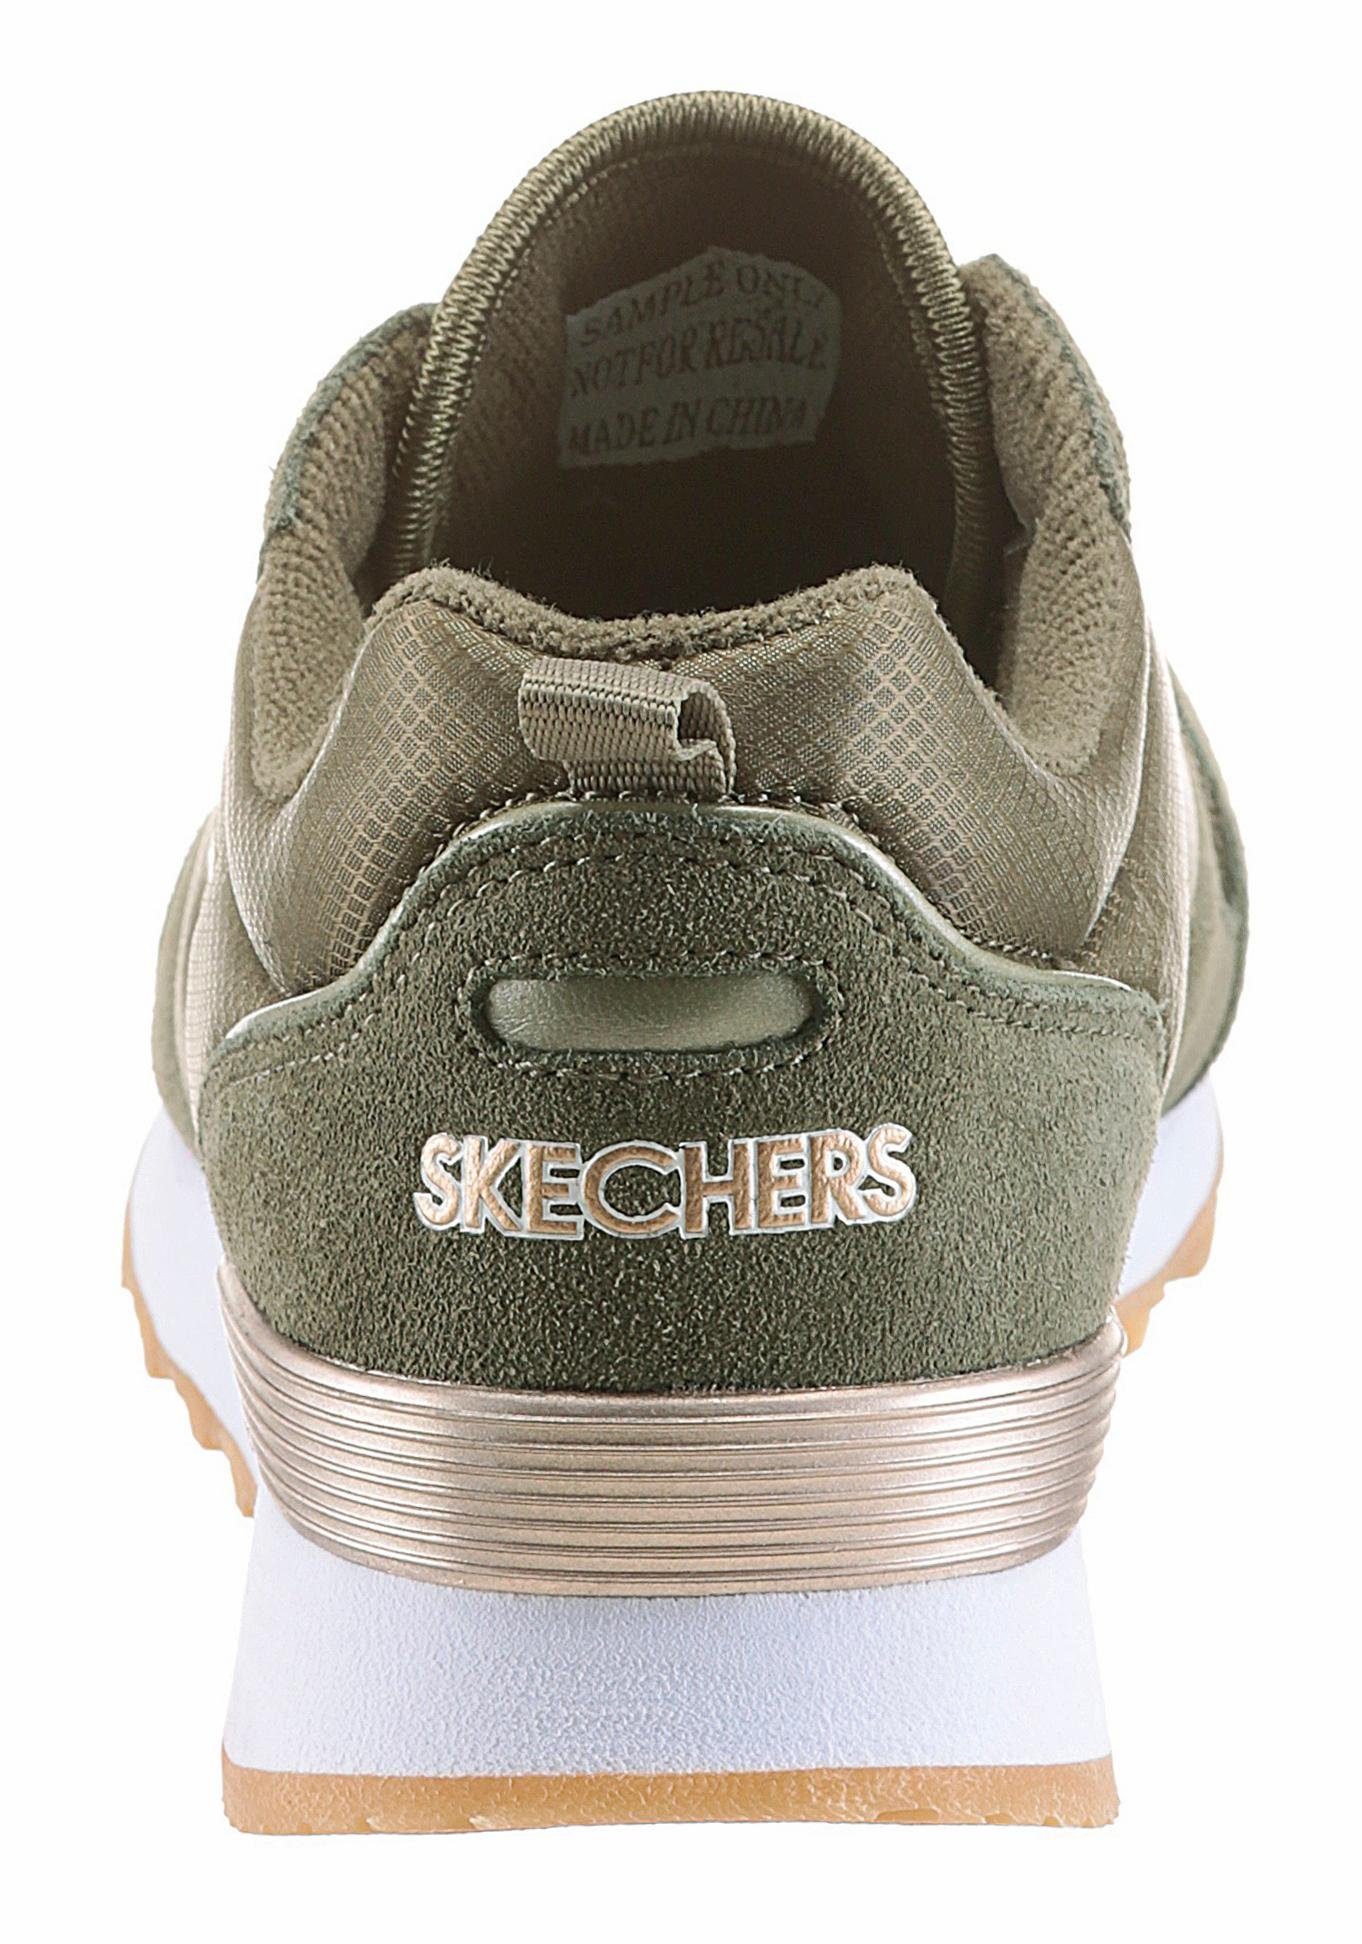 Air-Cooled Ausstattung Sneaker - 85 Skechers GURL Foam mit olivgrün OG GOLDN komfortabler Memory